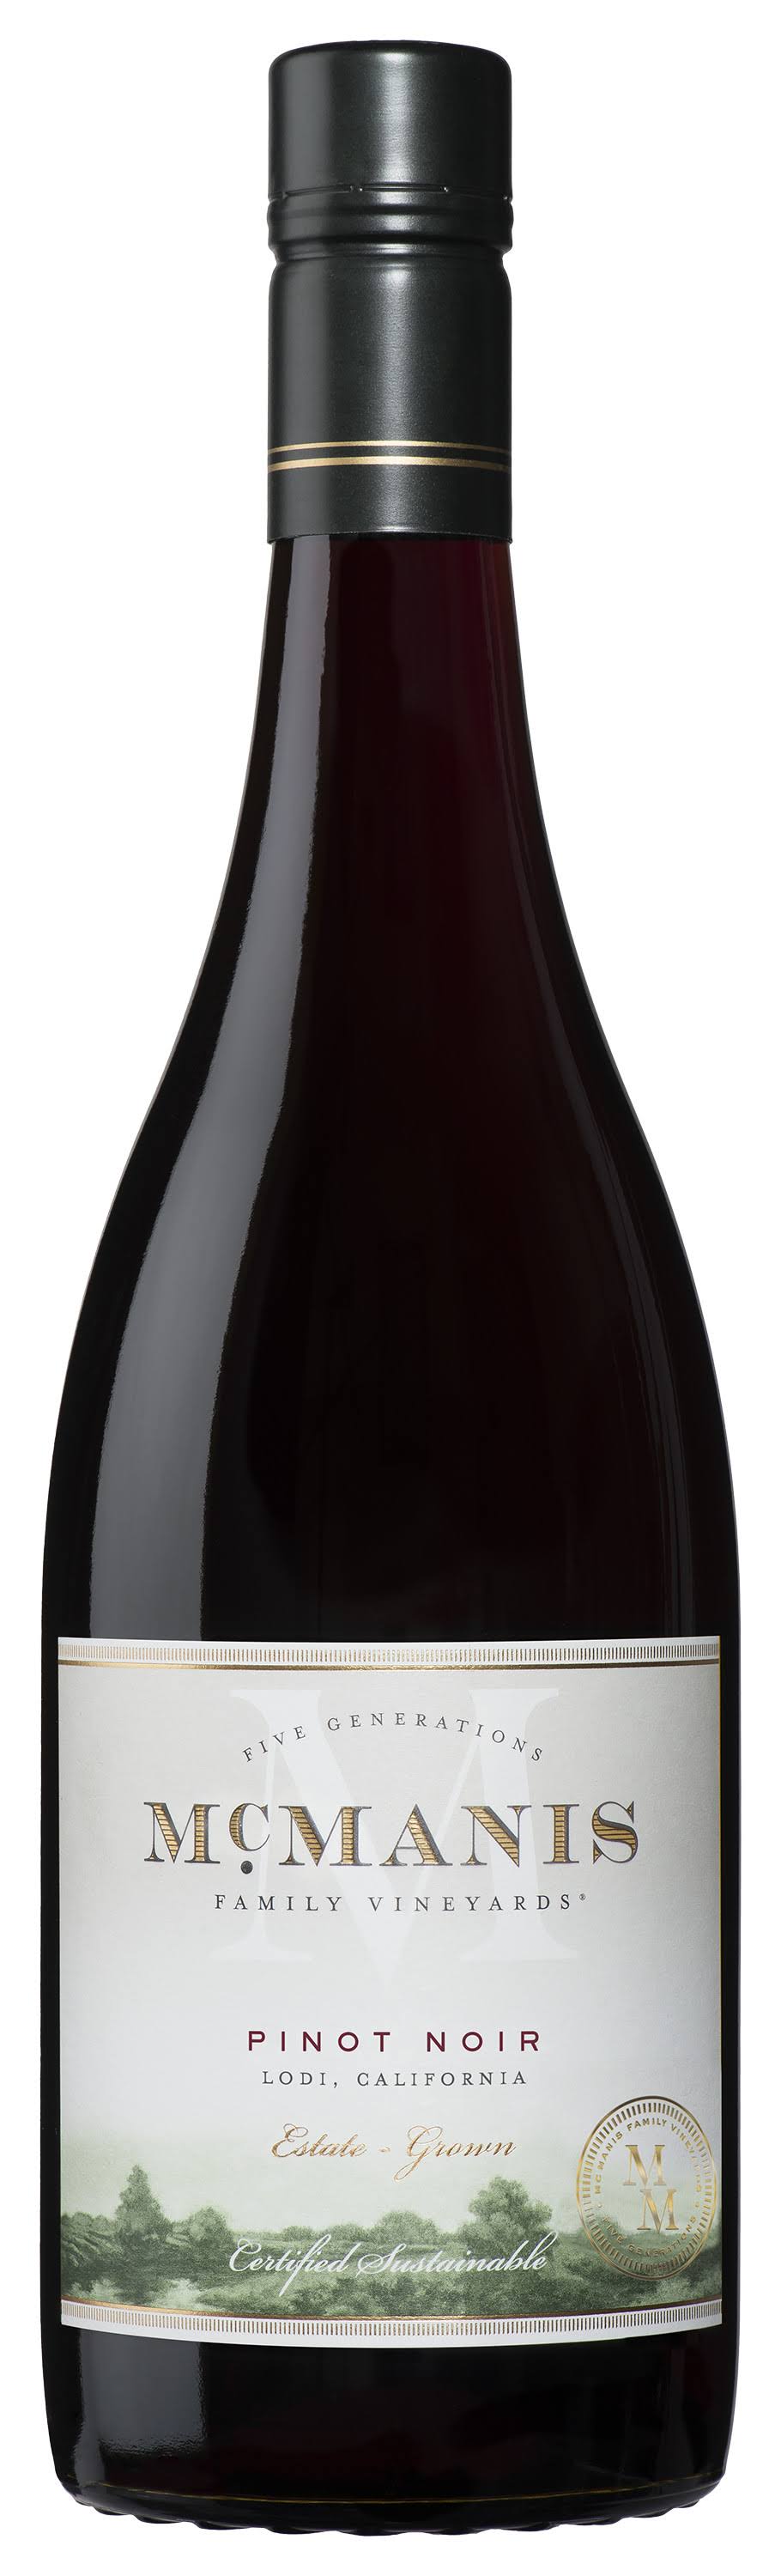 McManis Pinot Noir, California 2010 - 750 ml